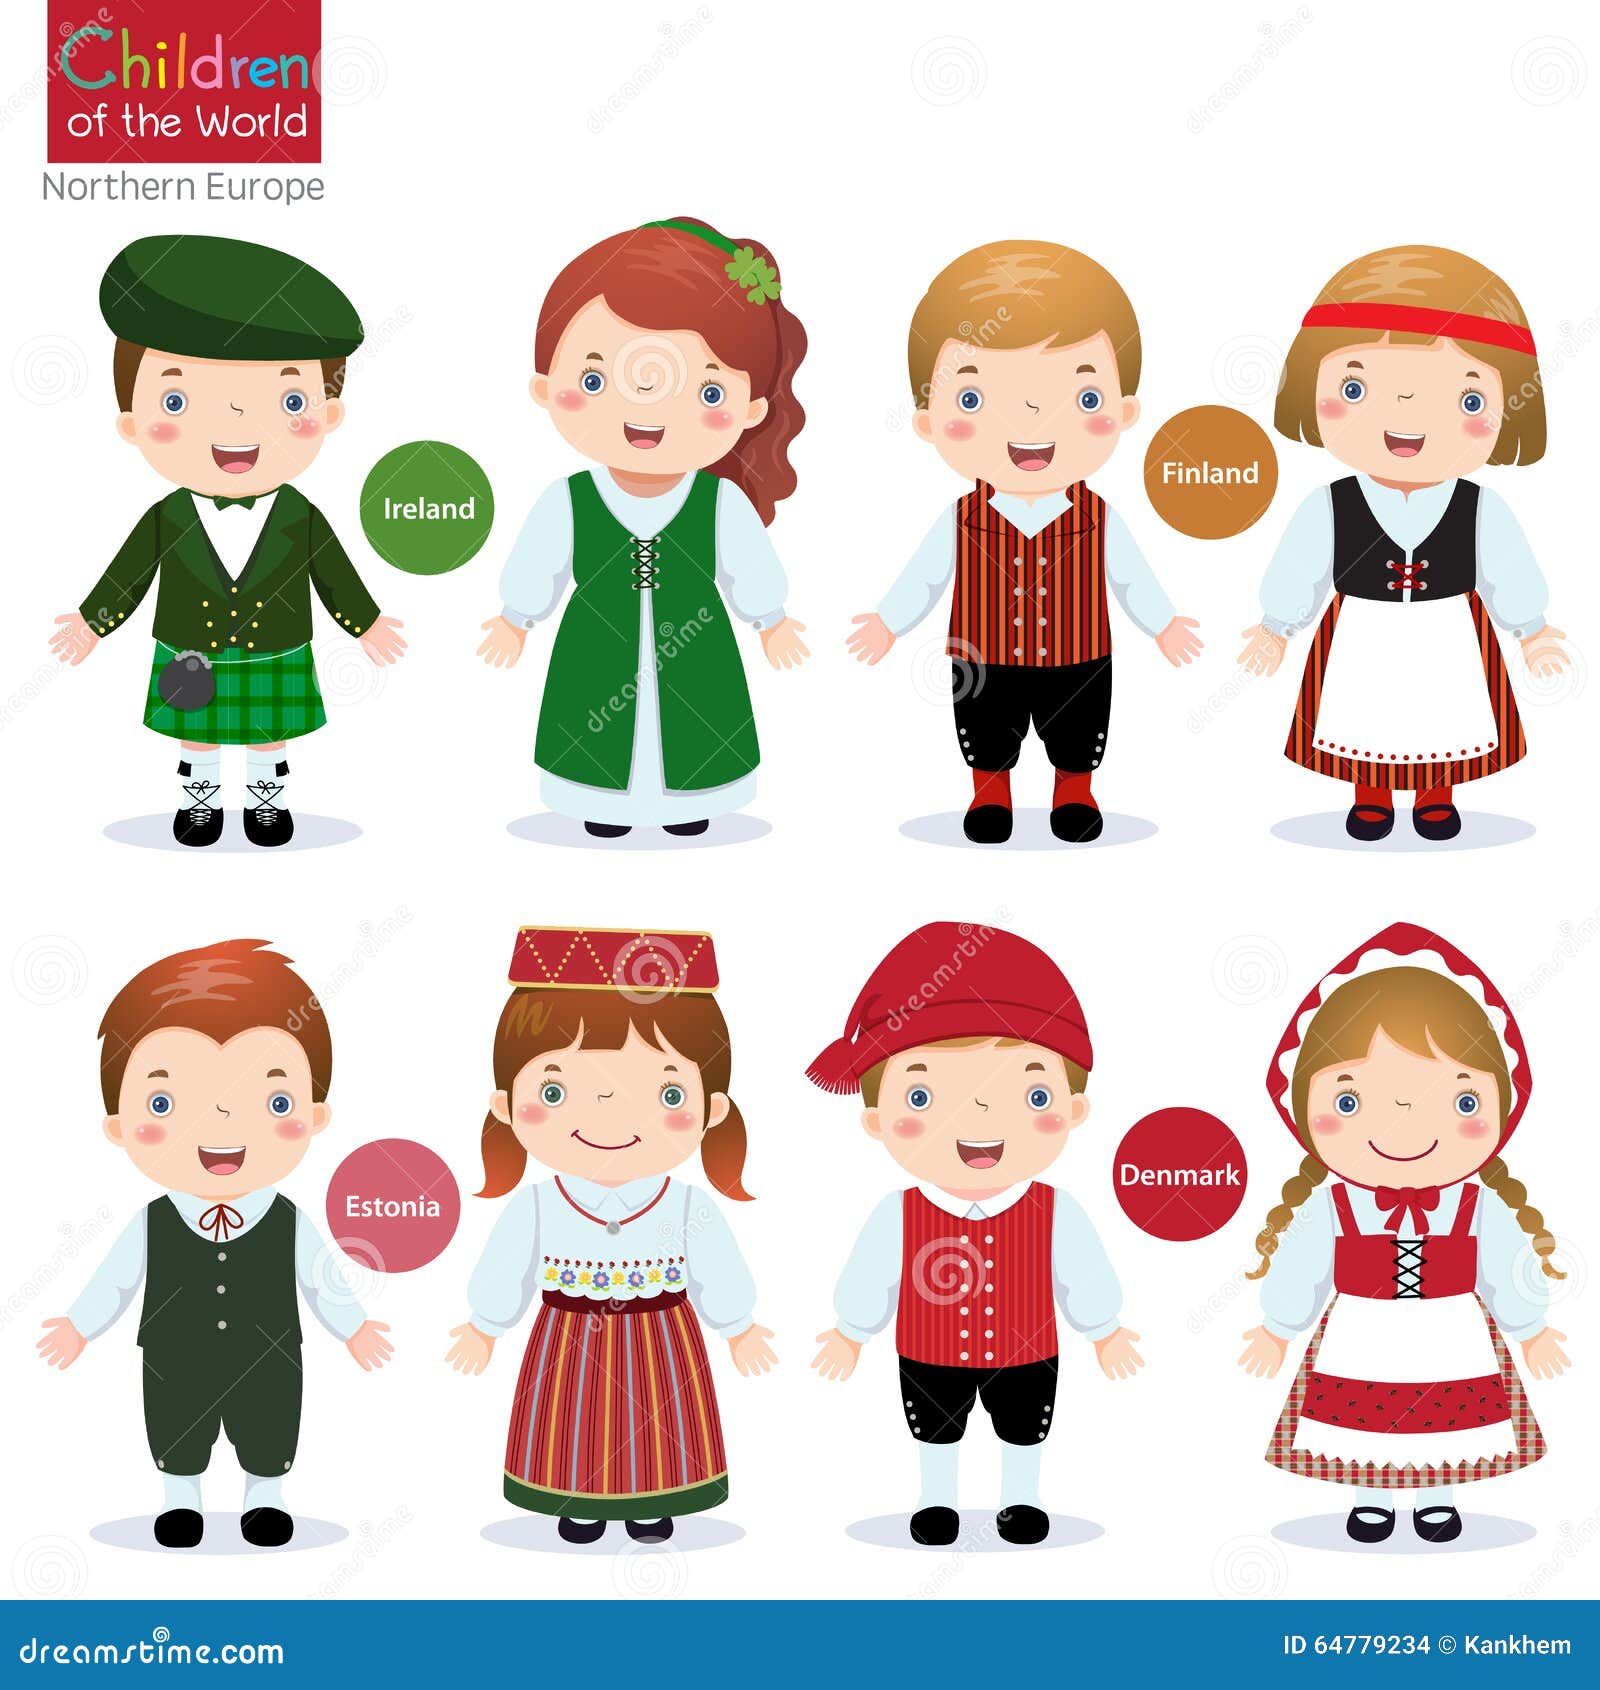 children of the world (ireland, finland, estonia and denmark)